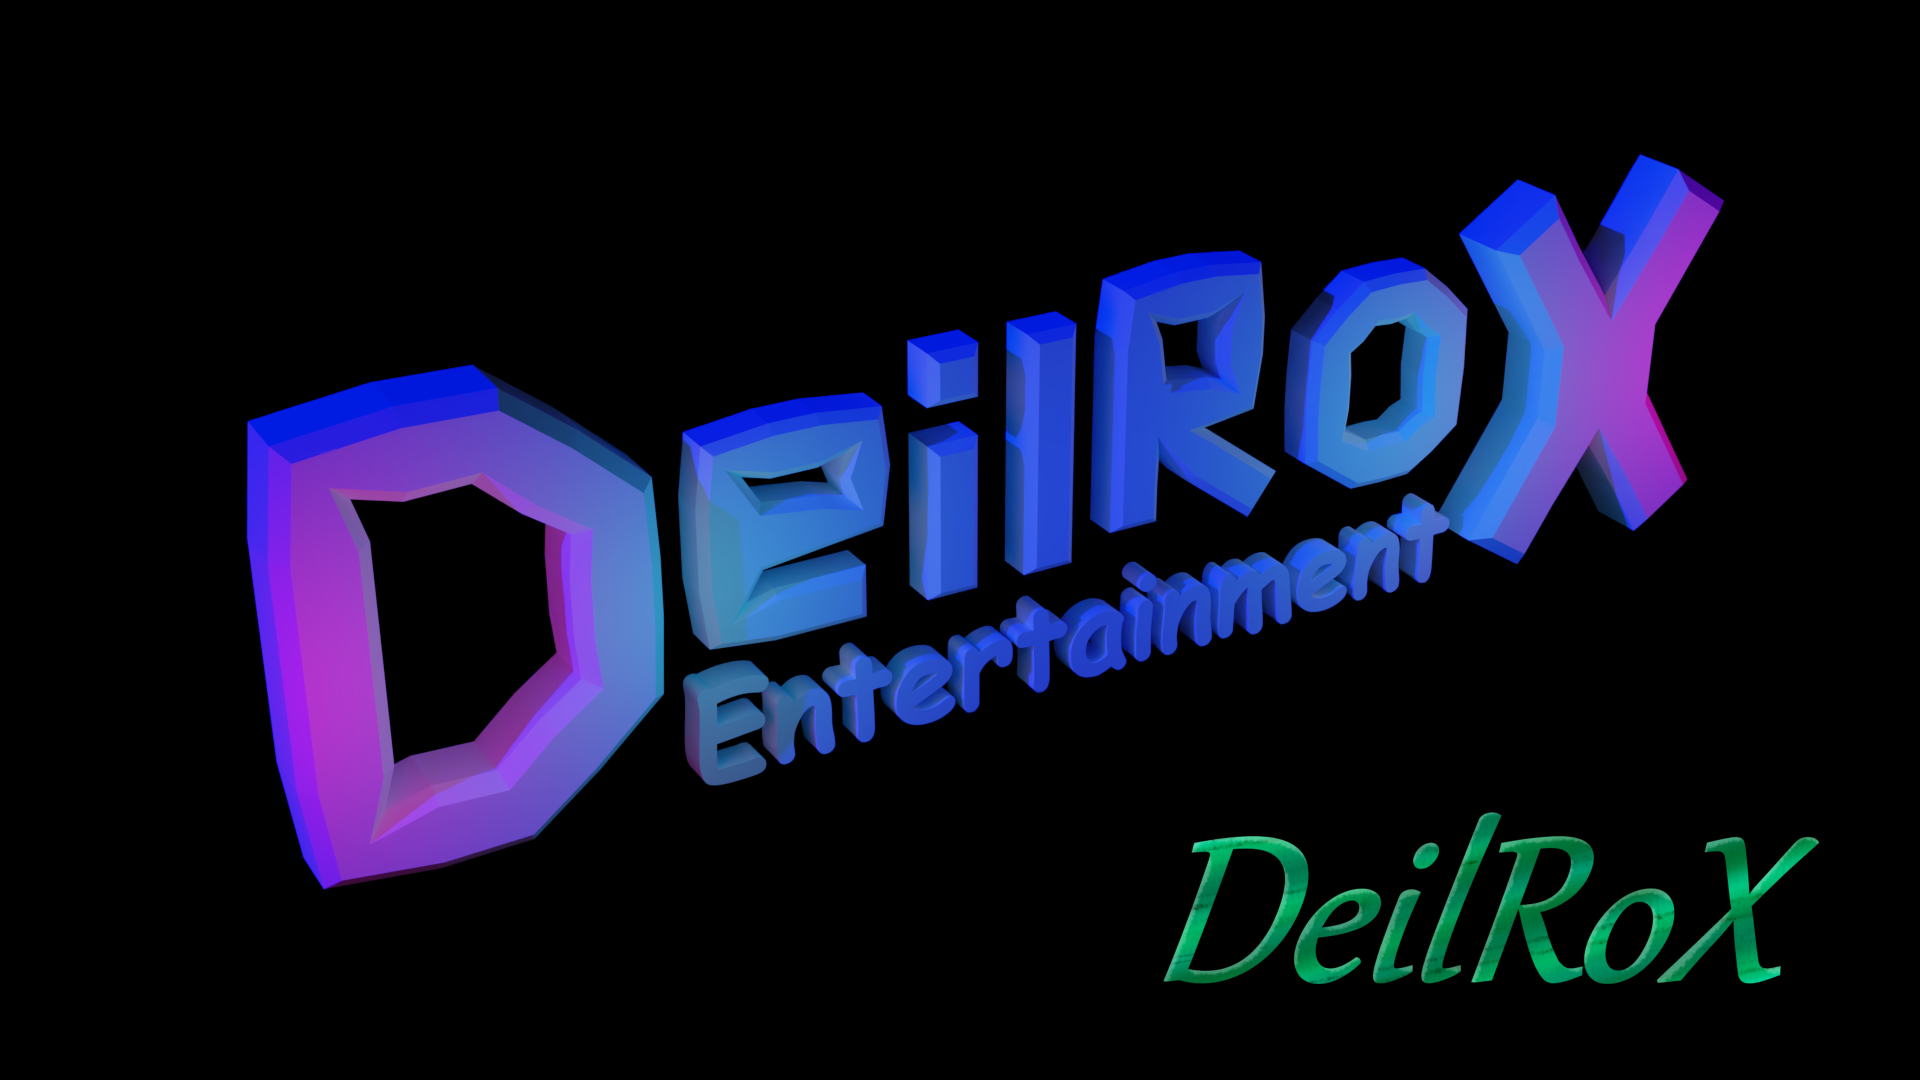 DeilRoX and DeilRoXEntertainment, website, games, videos, music, shop, blog, about me